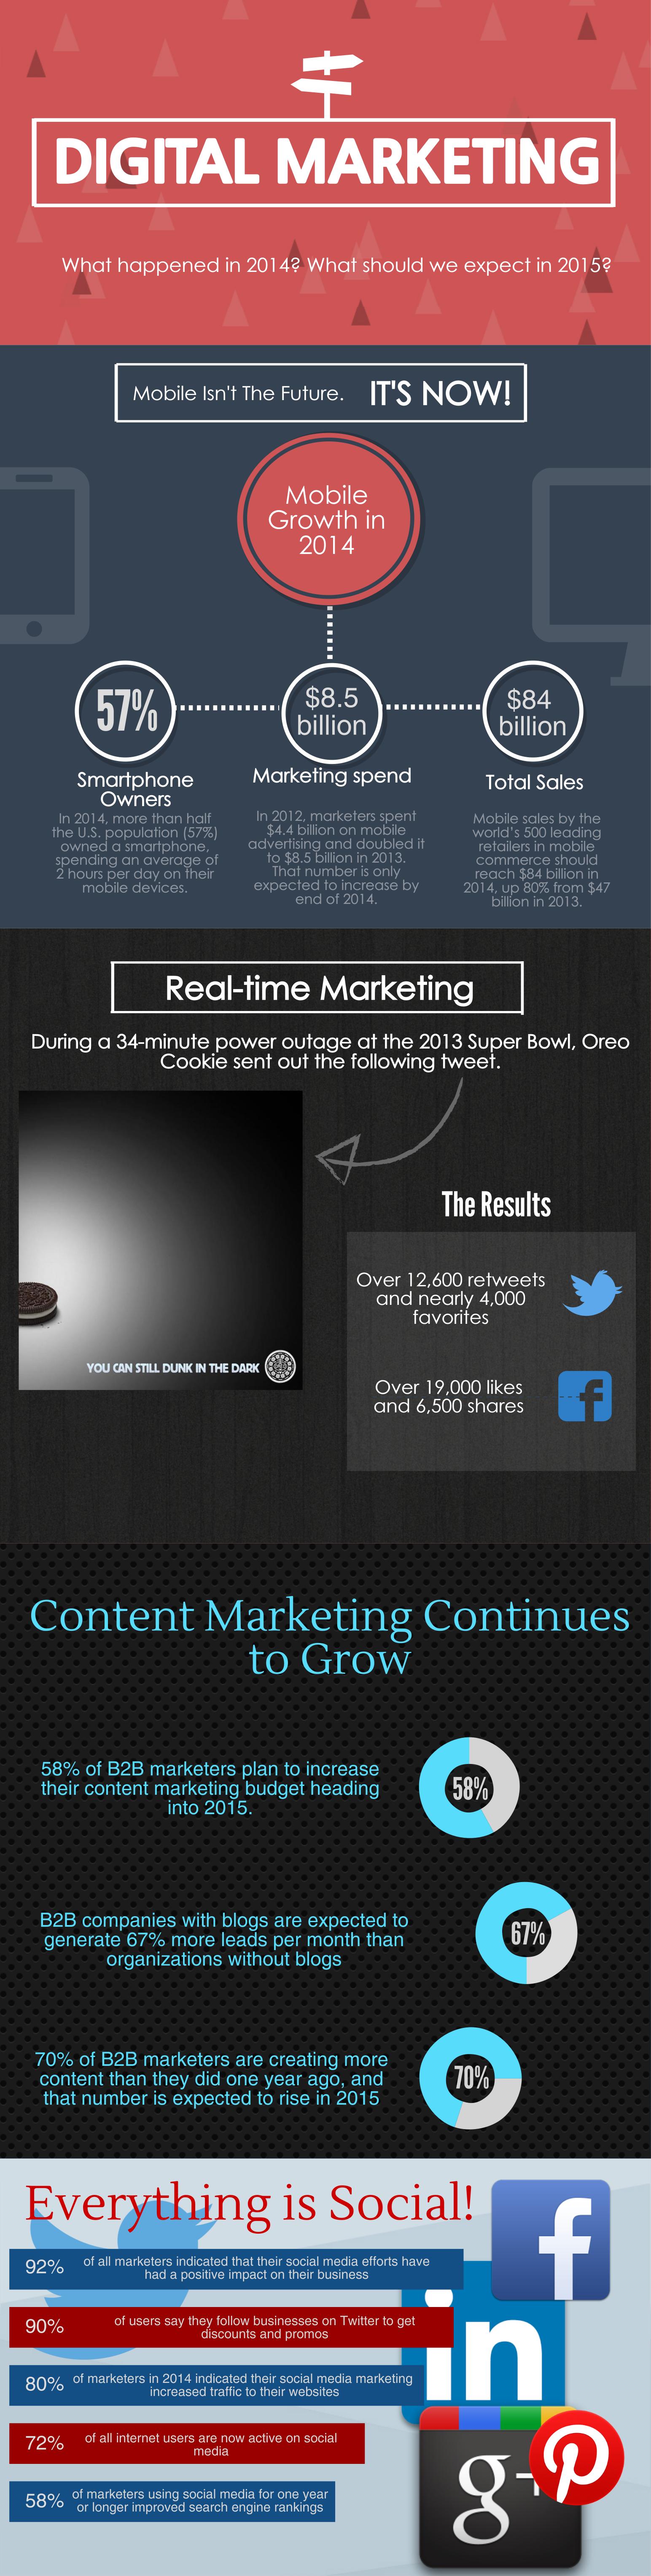 Digital Marketing: The Past, The Future (Infographic) image 201415digital.jpeg